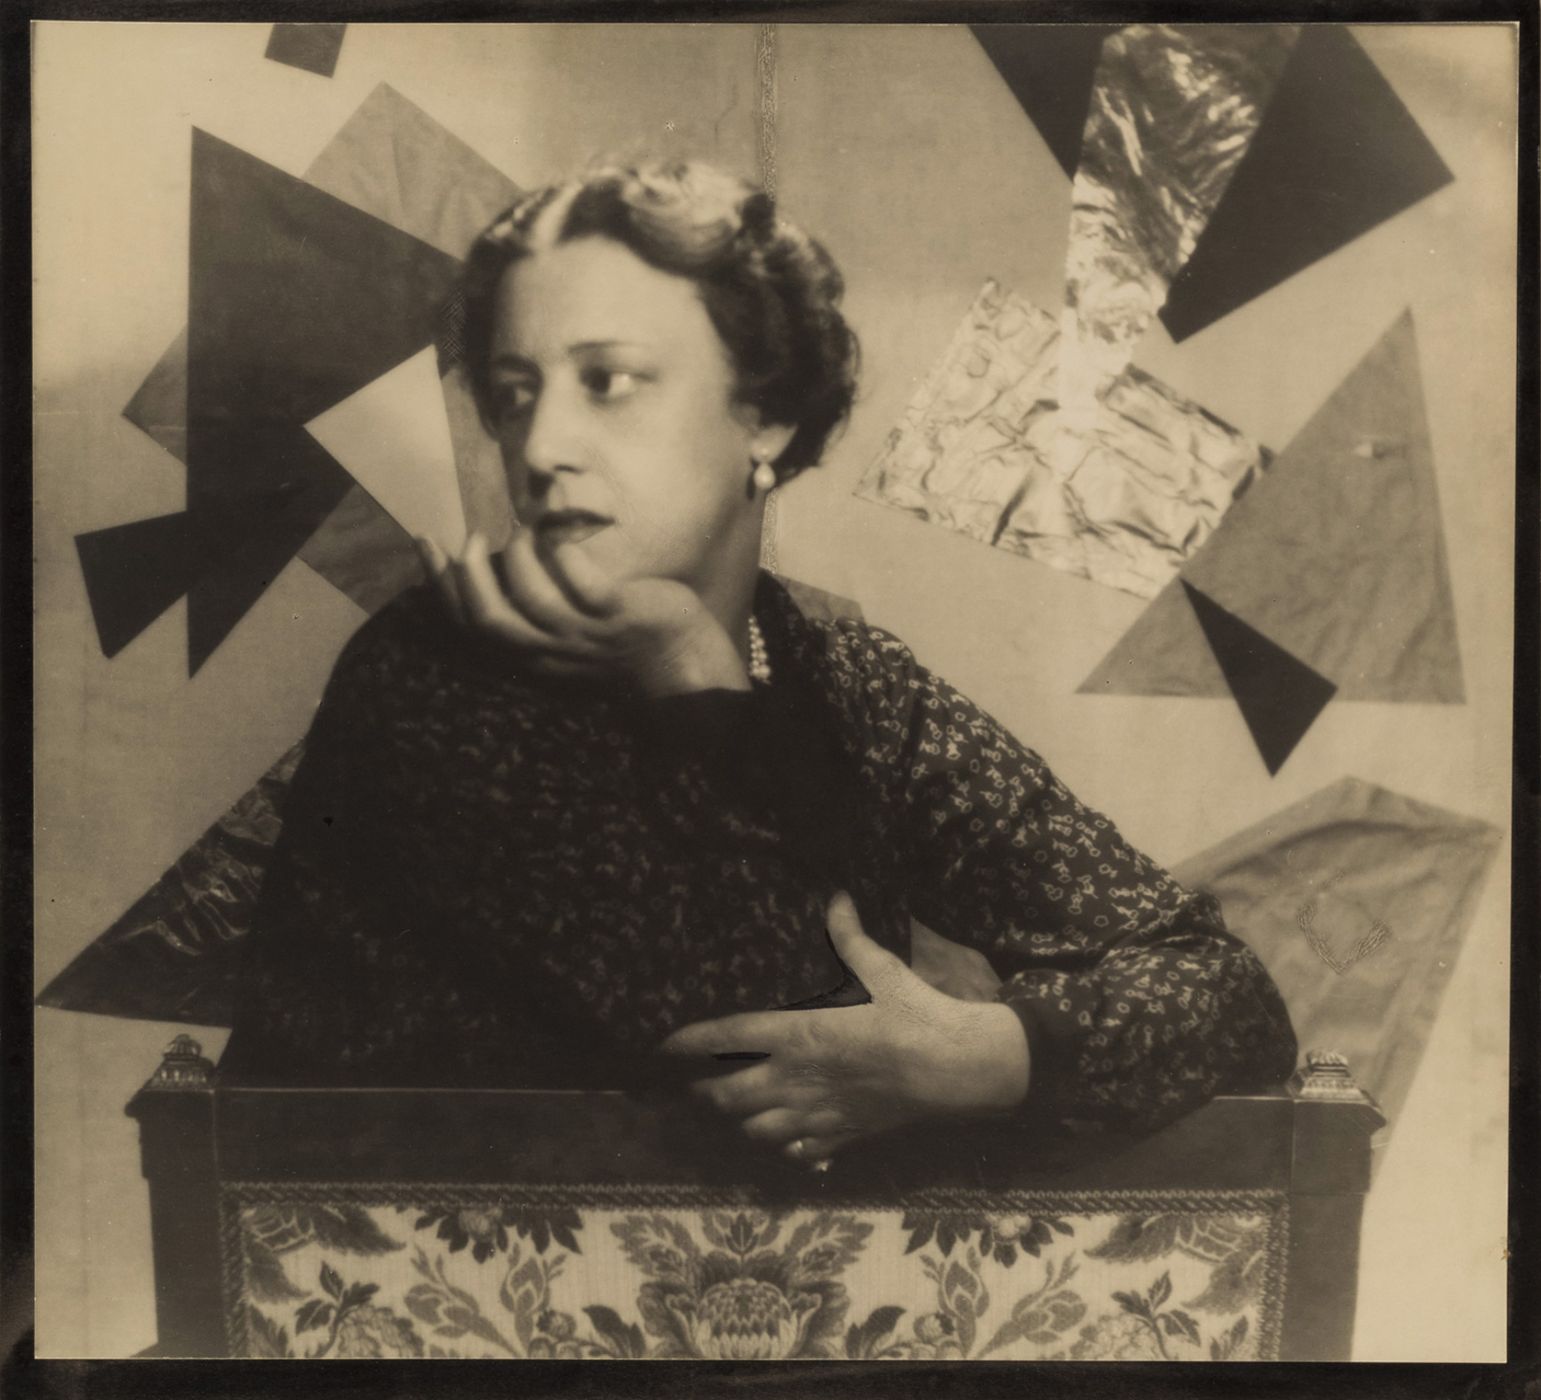 Cecil Beaton, “Mrs Beatrice Guinness”, 1930 ca.